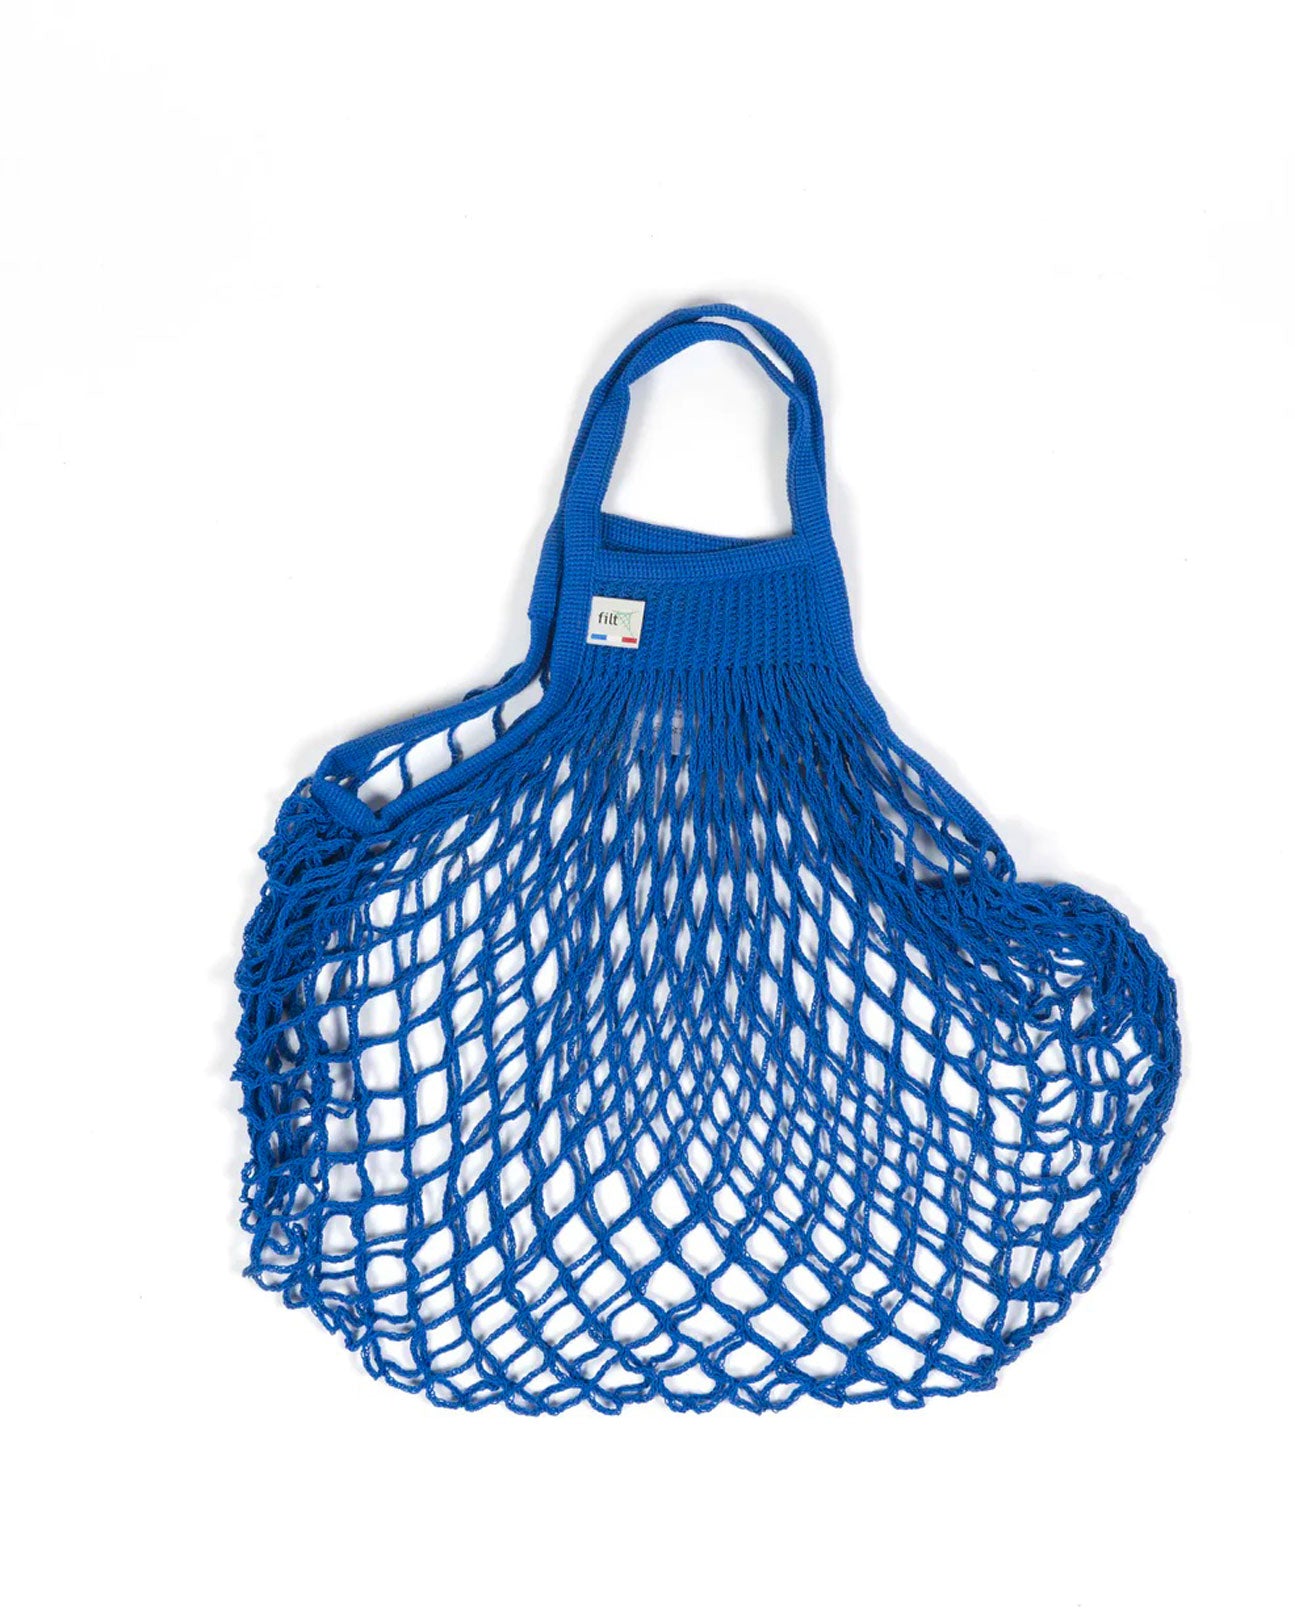 FILT FRANCE Net Mini Bag available at Lahn.shop